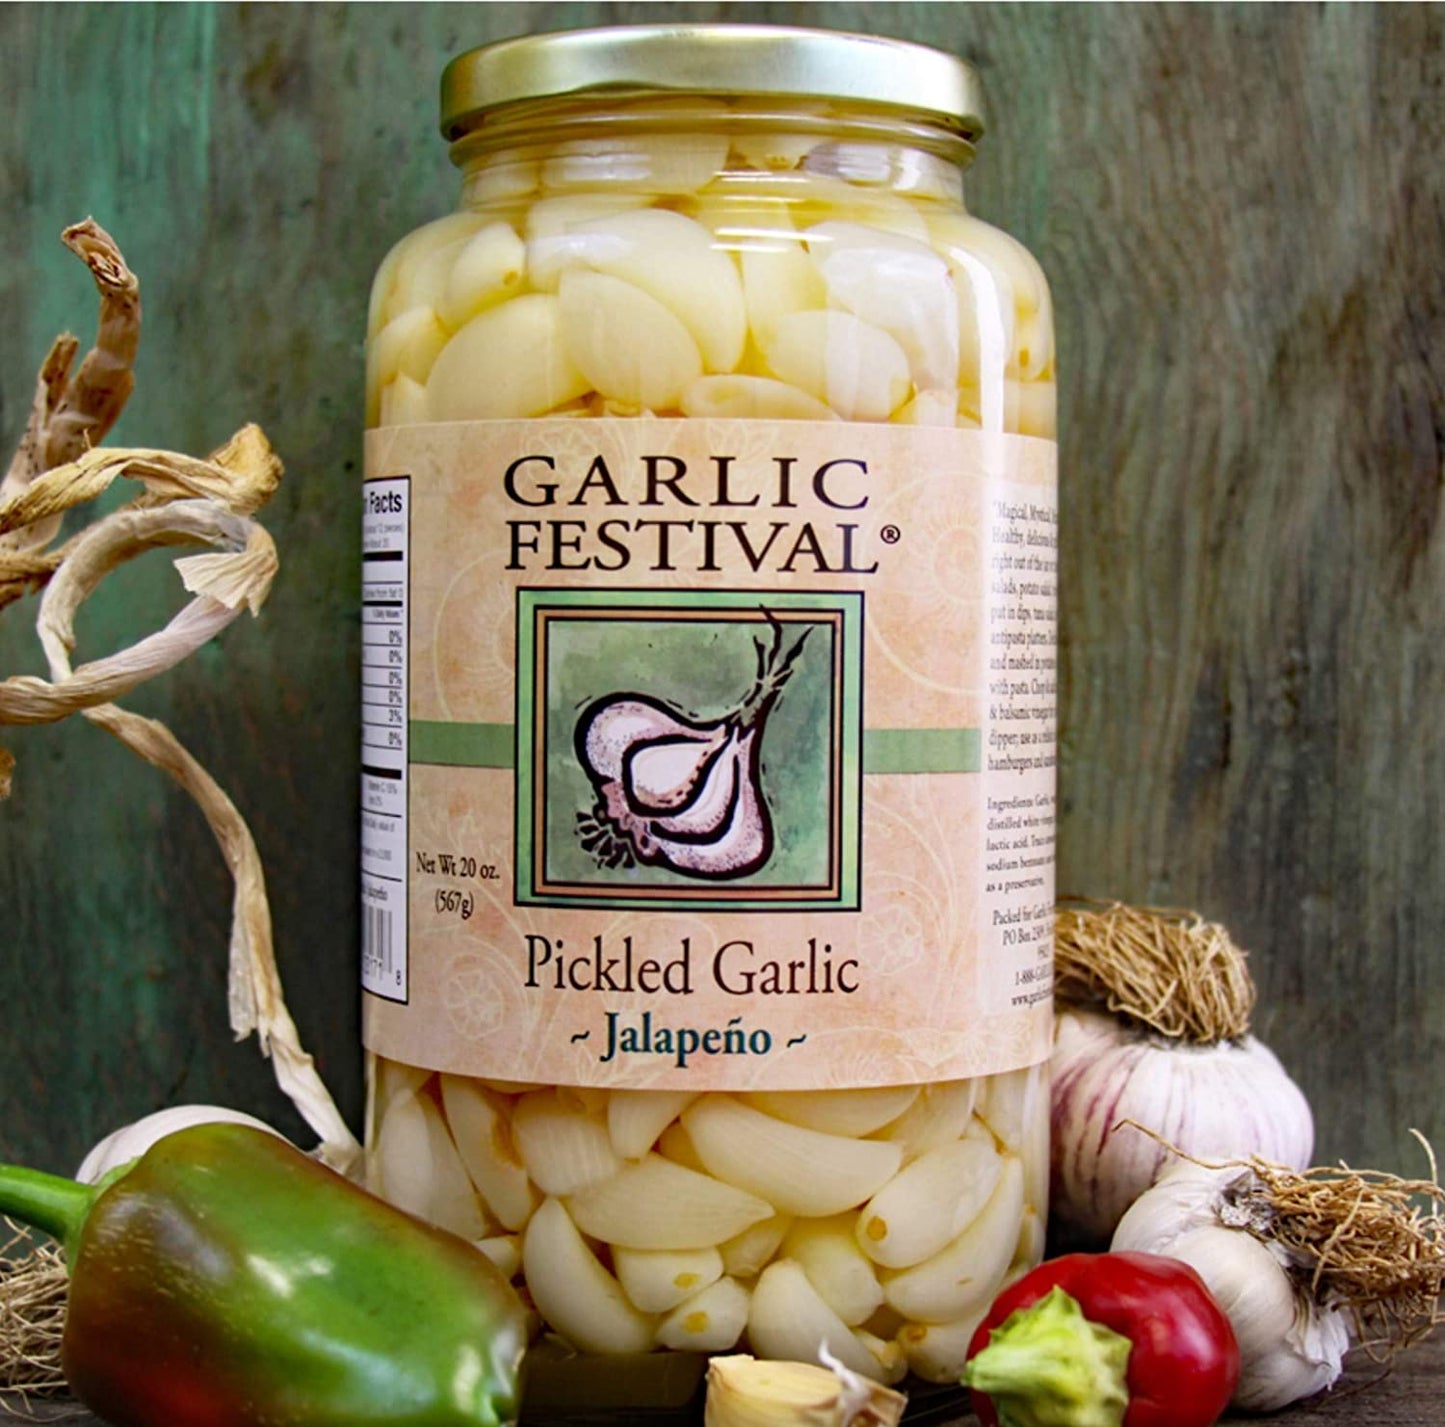 Pickled Garlic Jalapeno Garlic Festival 32 oz $22.98